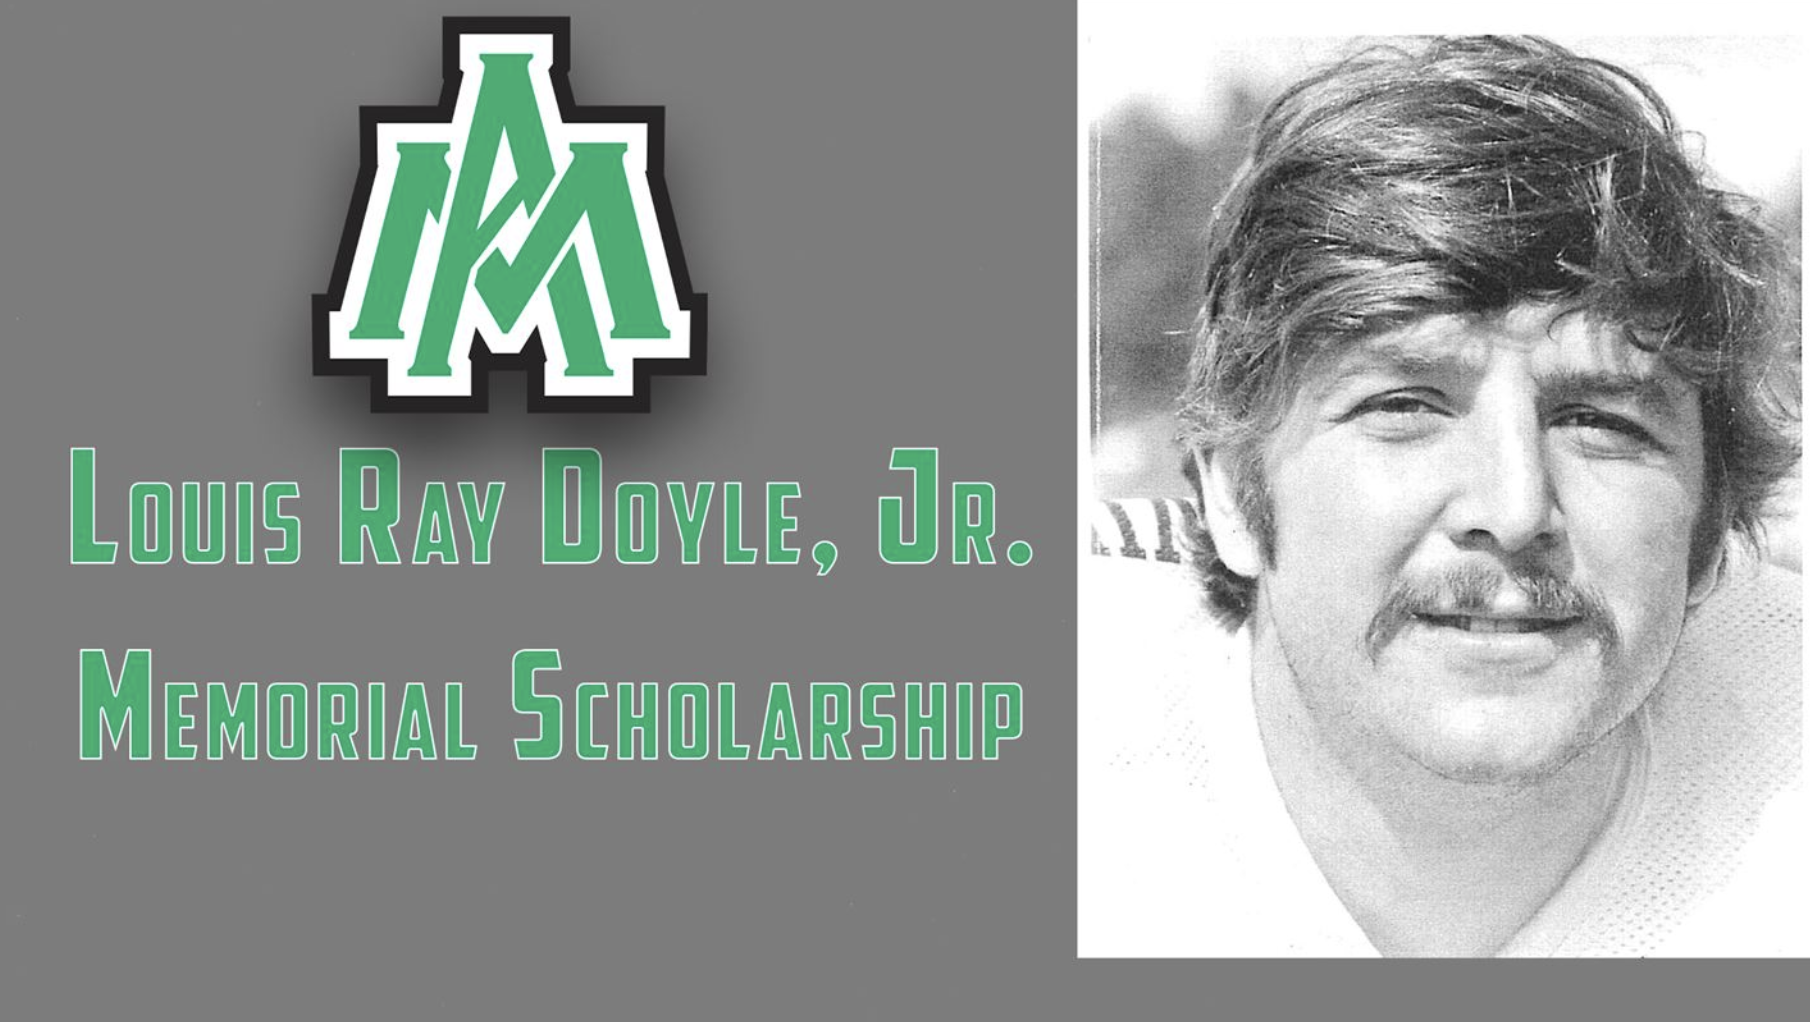 UAM announces the 1979 Champions/Ray Doyle Memorial Scholarship